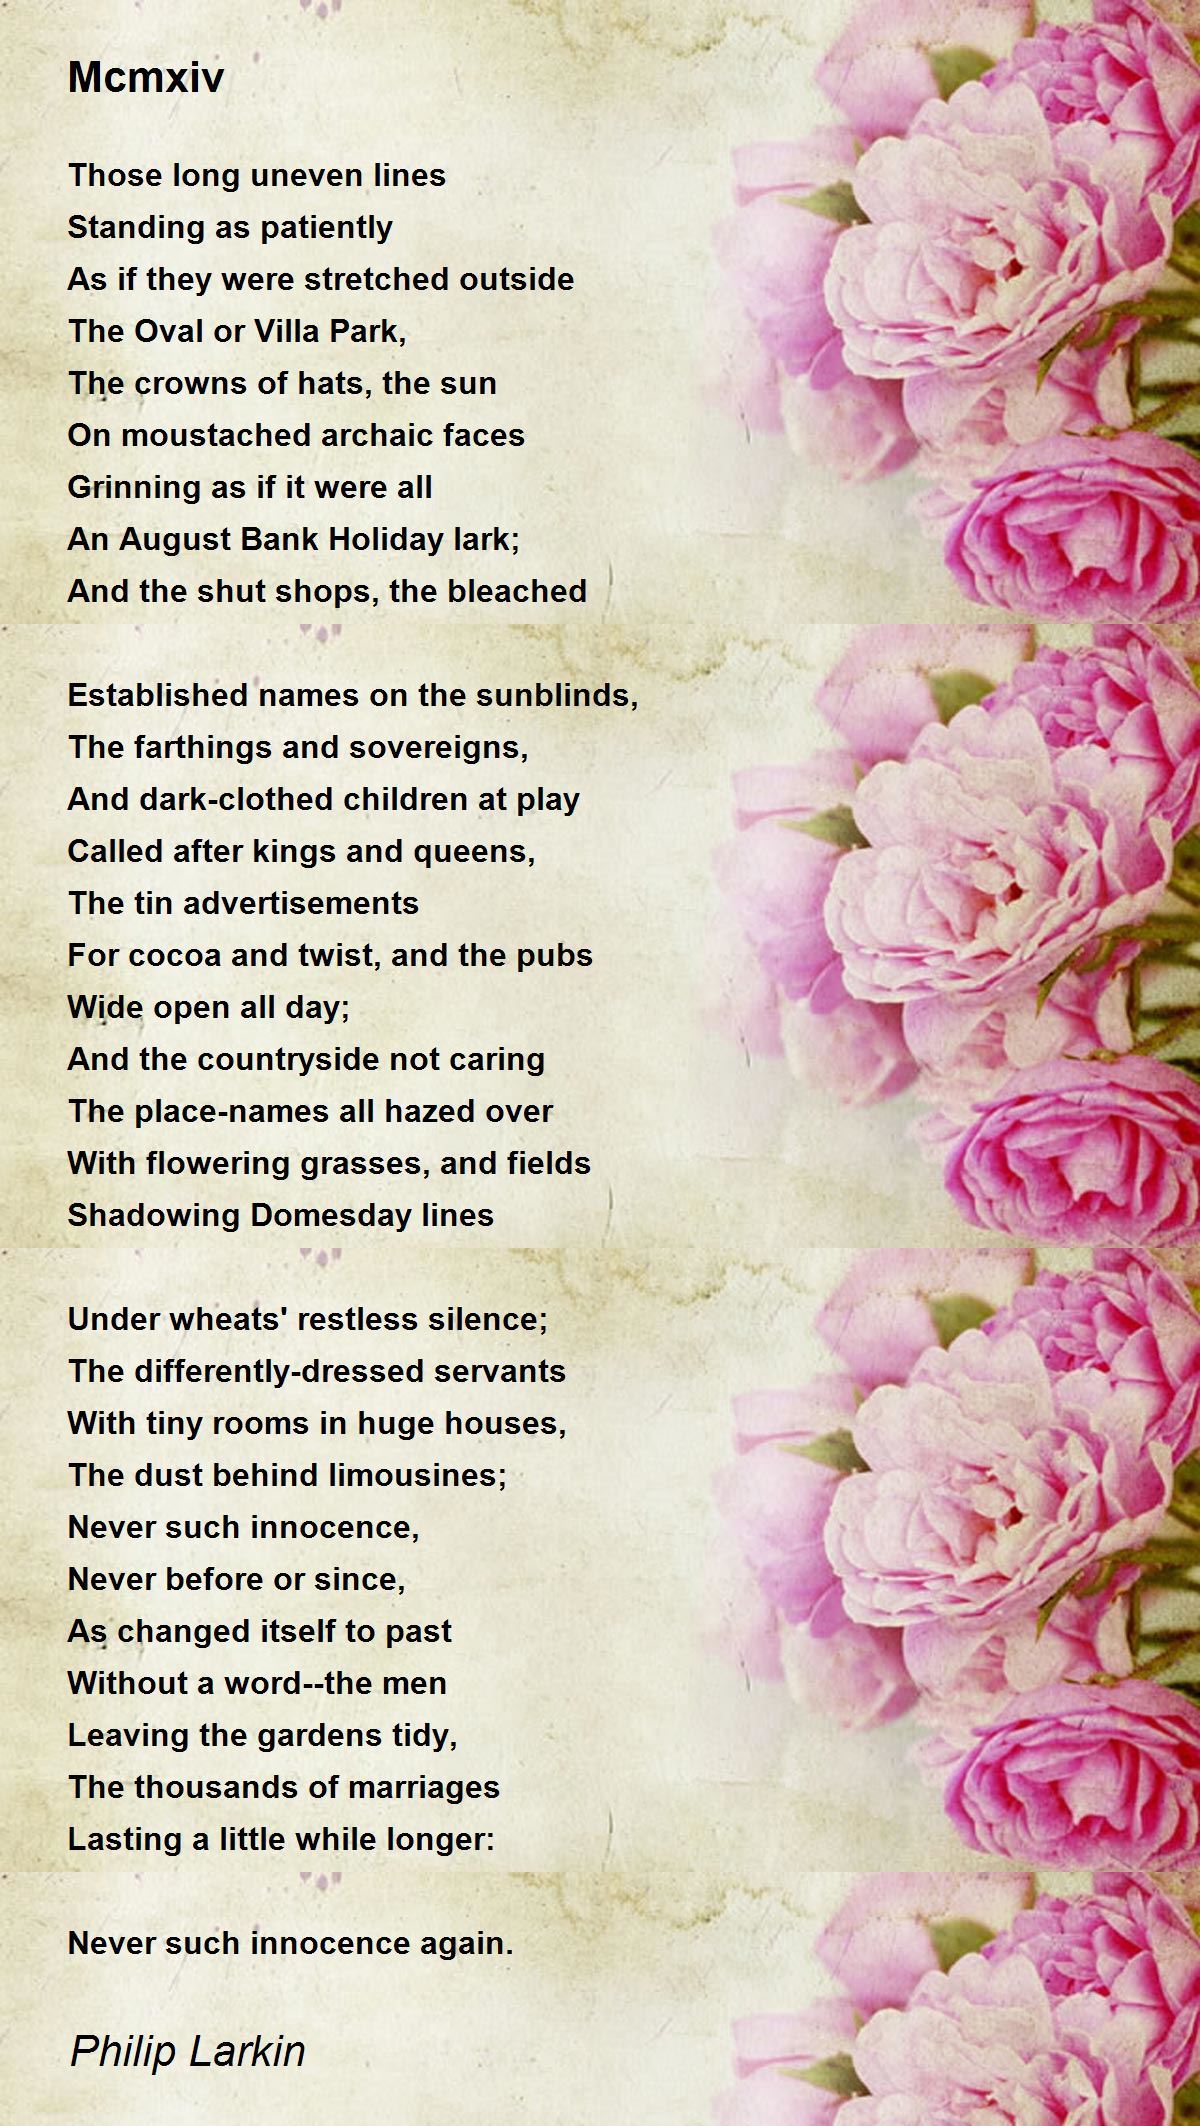 Mcmxiv Poem by Philip Larkin - Poem Hunter